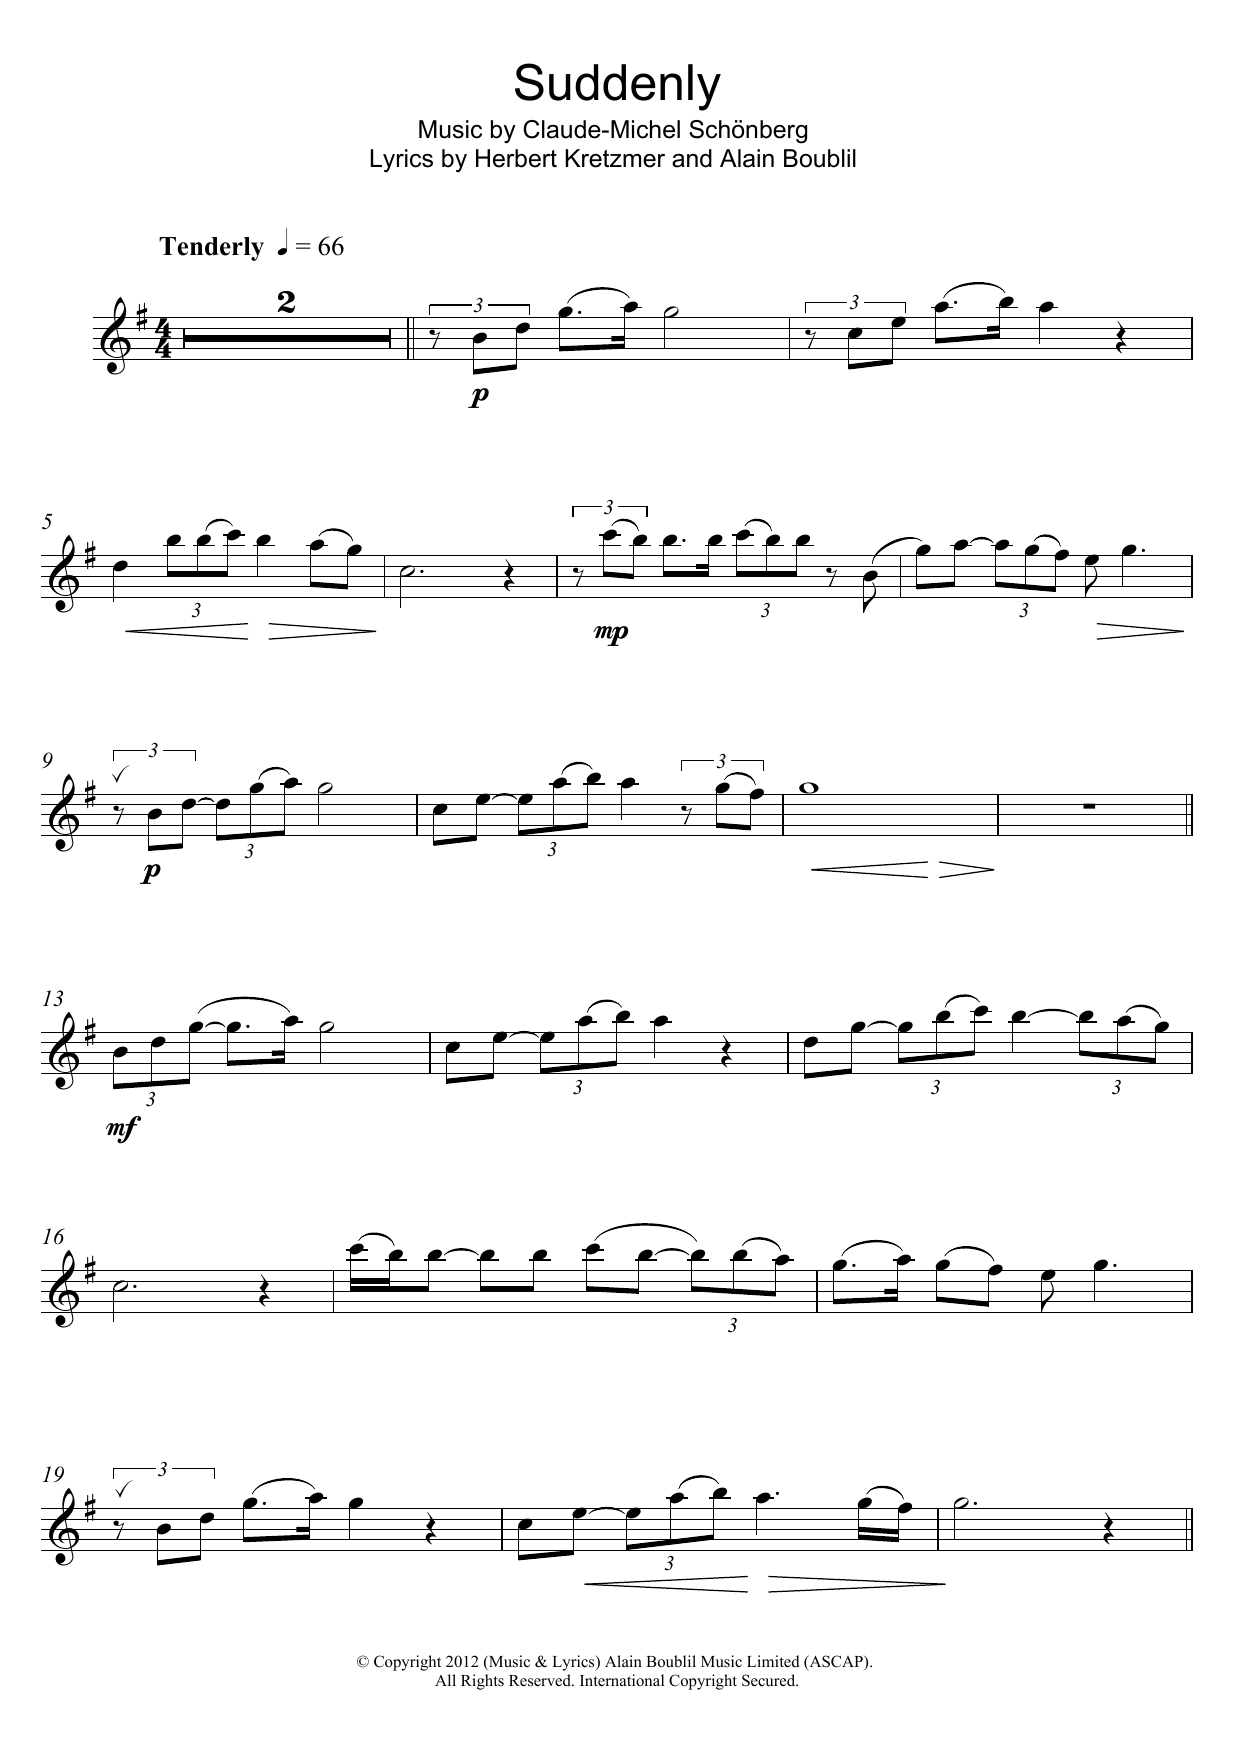 Hugh Jackman Suddenly Sheet Music Notes & Chords for Flute - Download or Print PDF